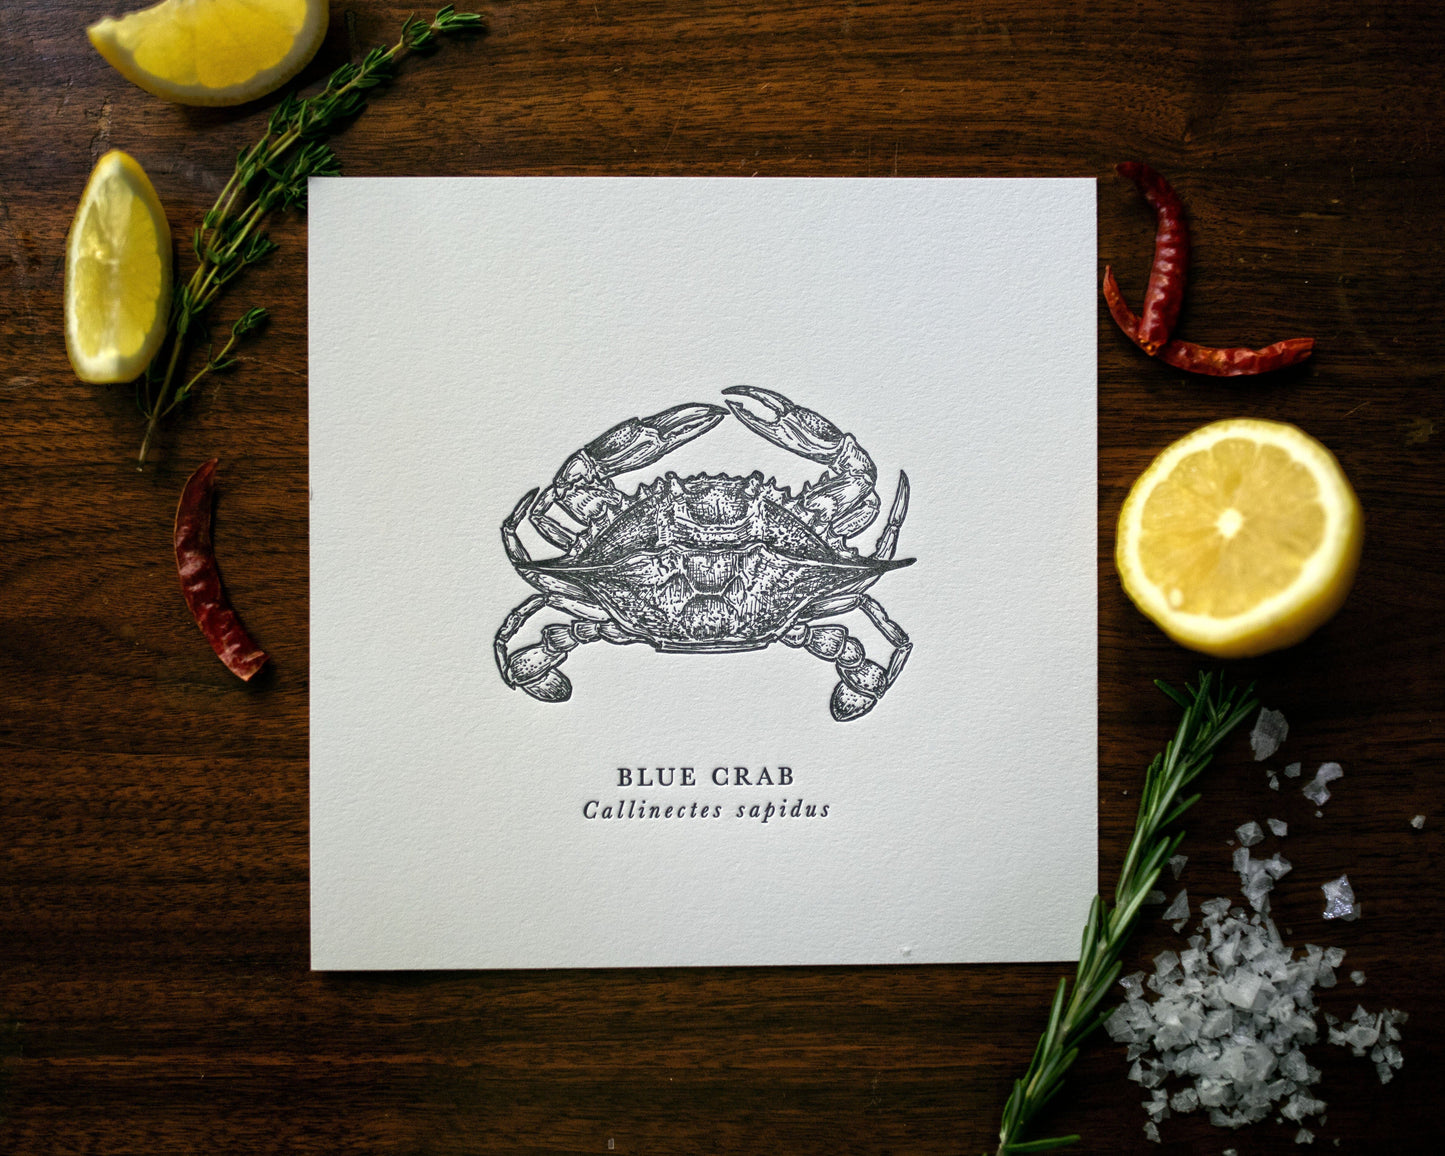 Blue Crab Letterpress Print